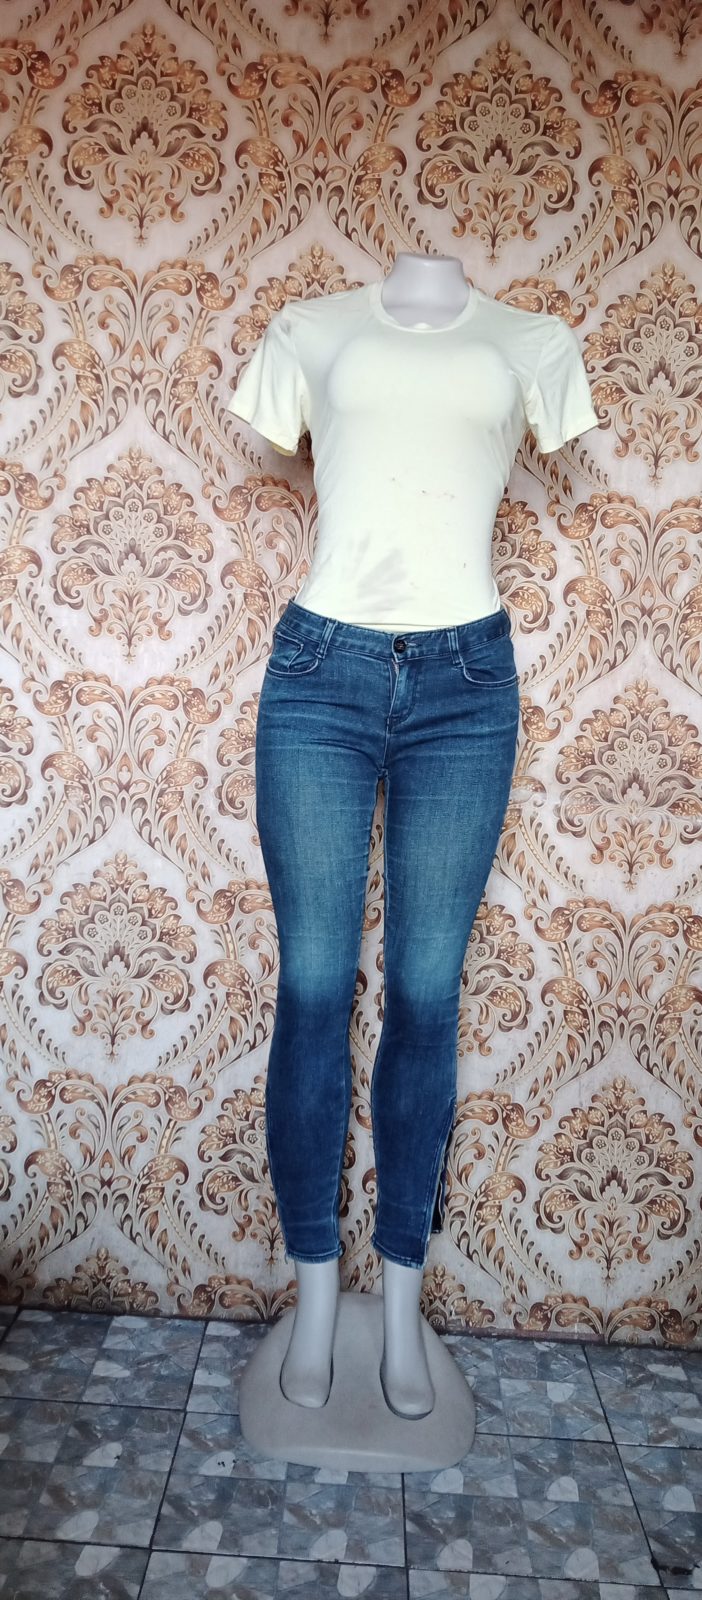 Ladies denim jeans trousers